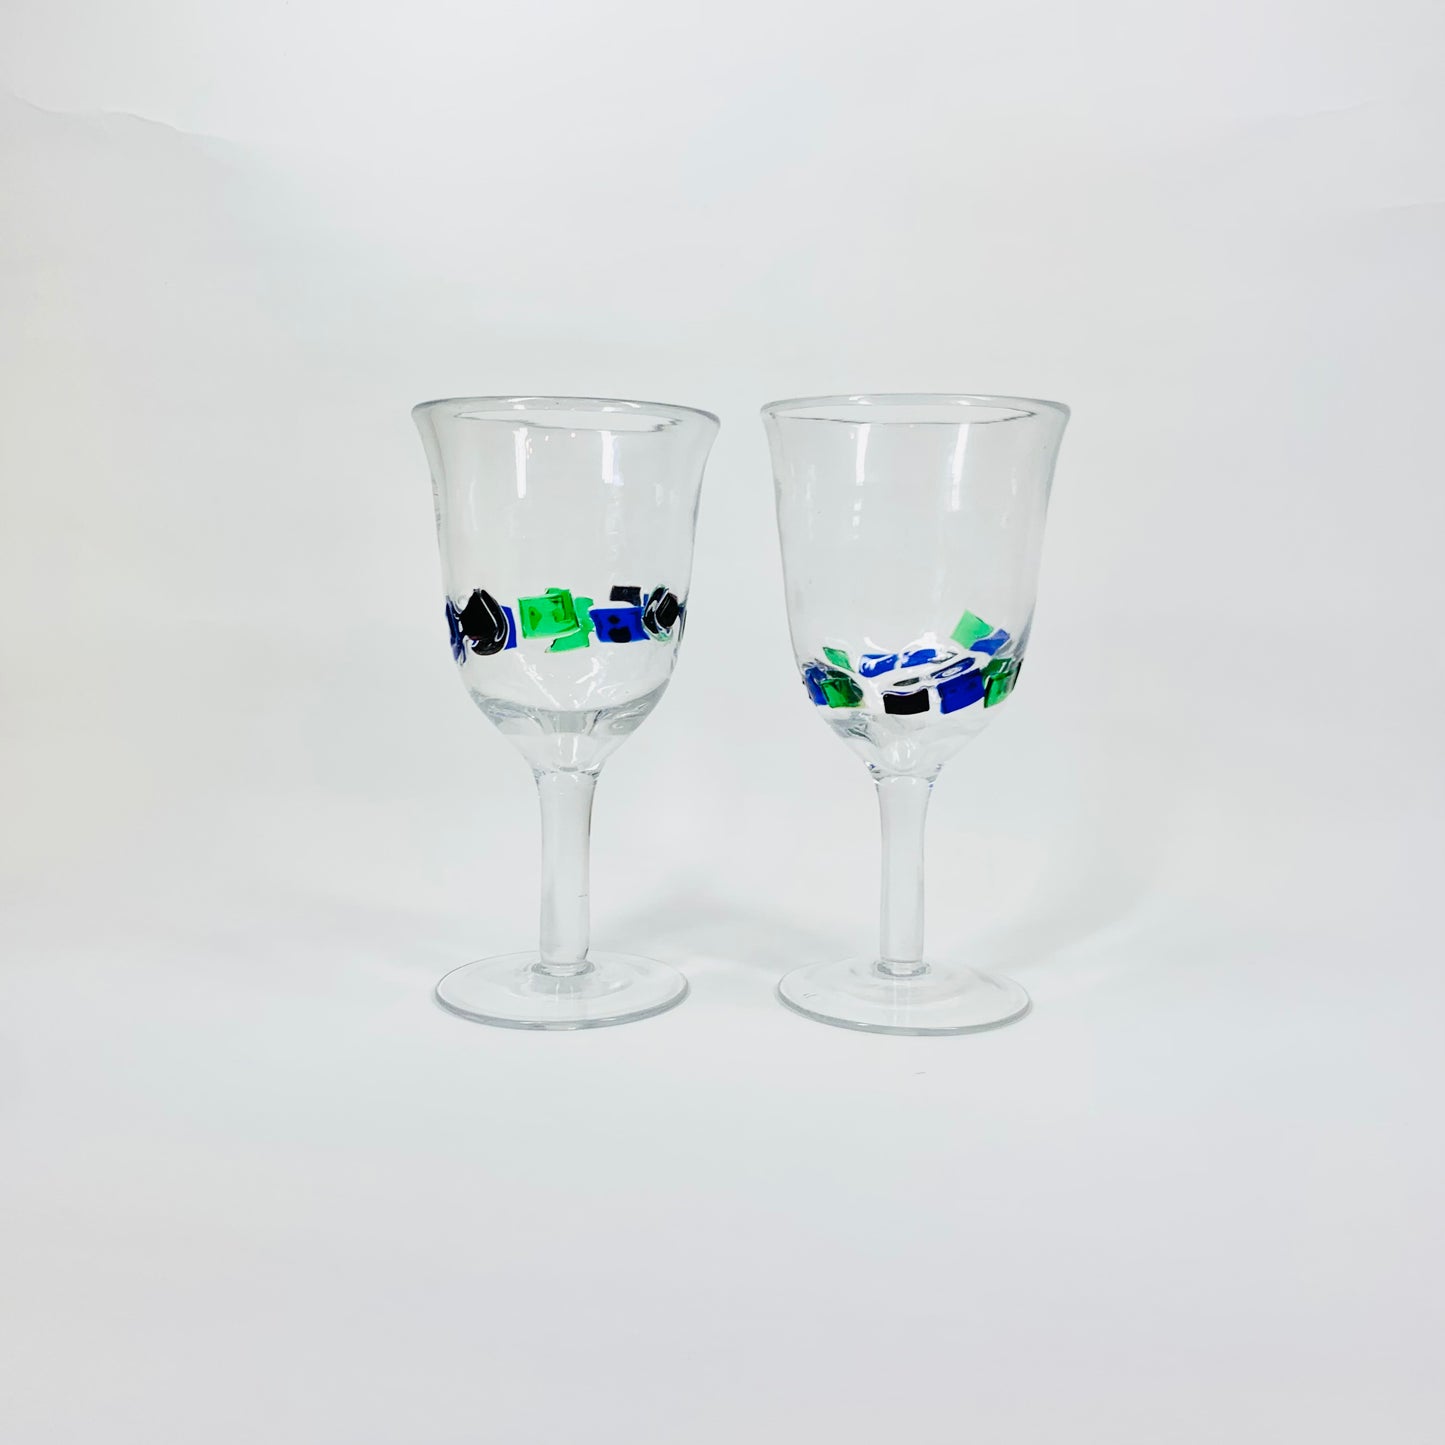 MURANO MOSAIC GLASS GOBLETS